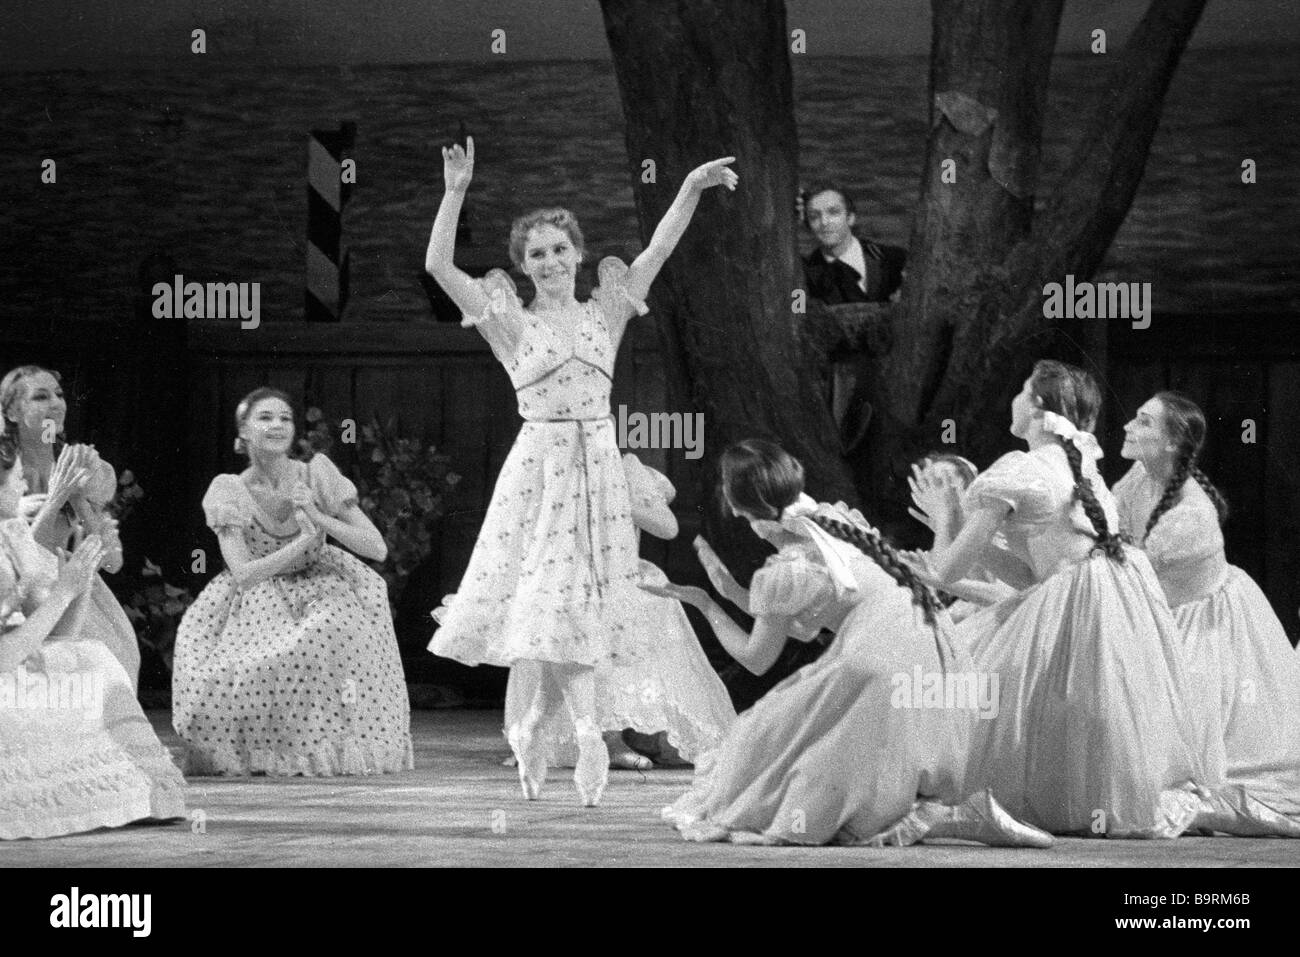 People s the U S S R Olga Lepeshinskaya center as Parasha the ballet The Bronze Horseman Stock Photo - Alamy